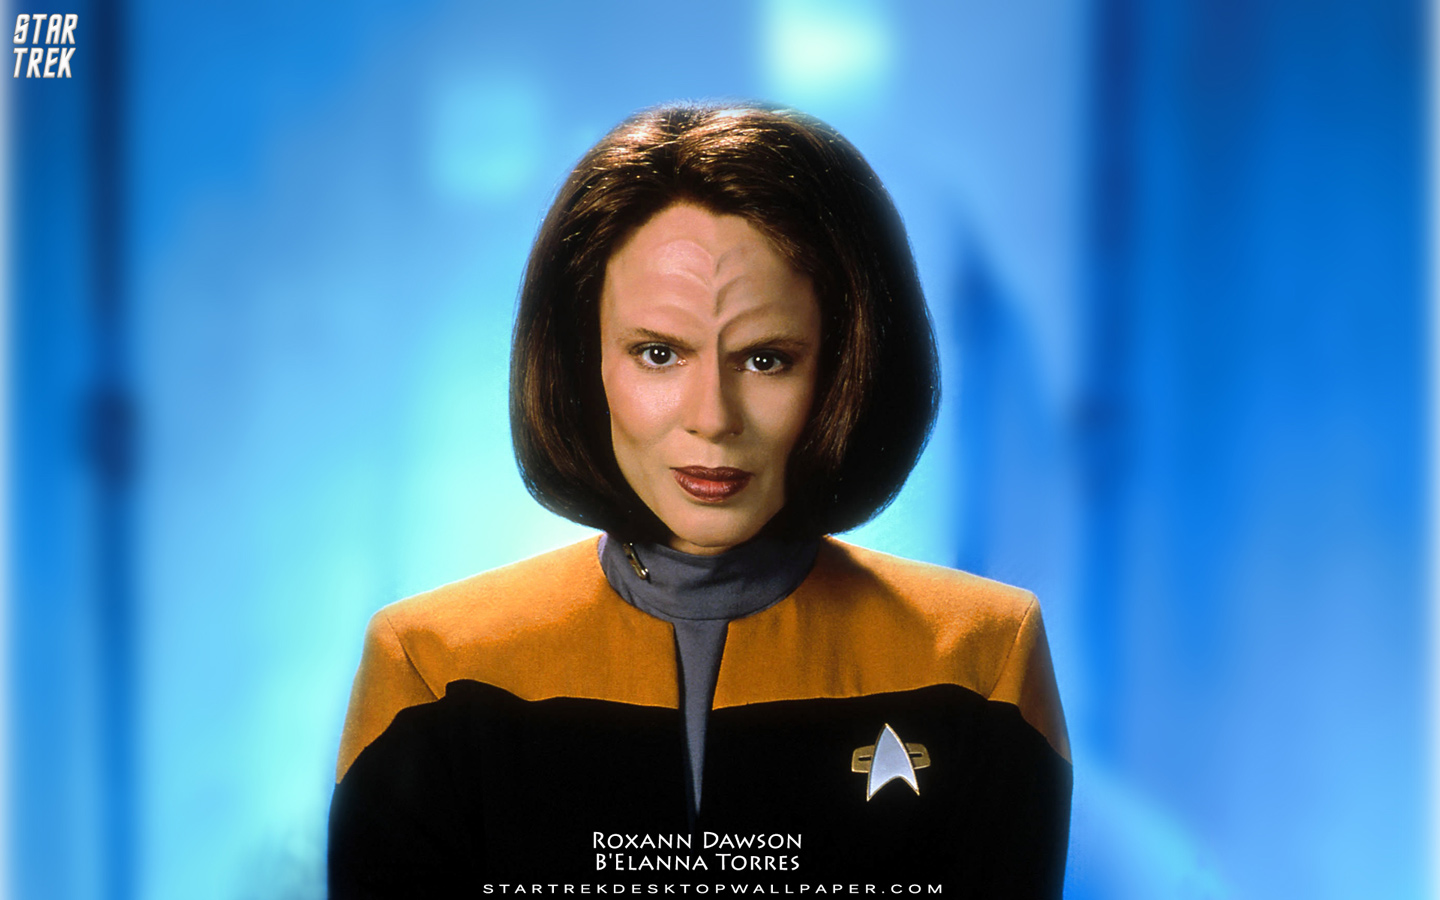 - Star Trek Voyager B'Elanna Torres - free Star Trek computer desktop wallpaper, pictures, images.